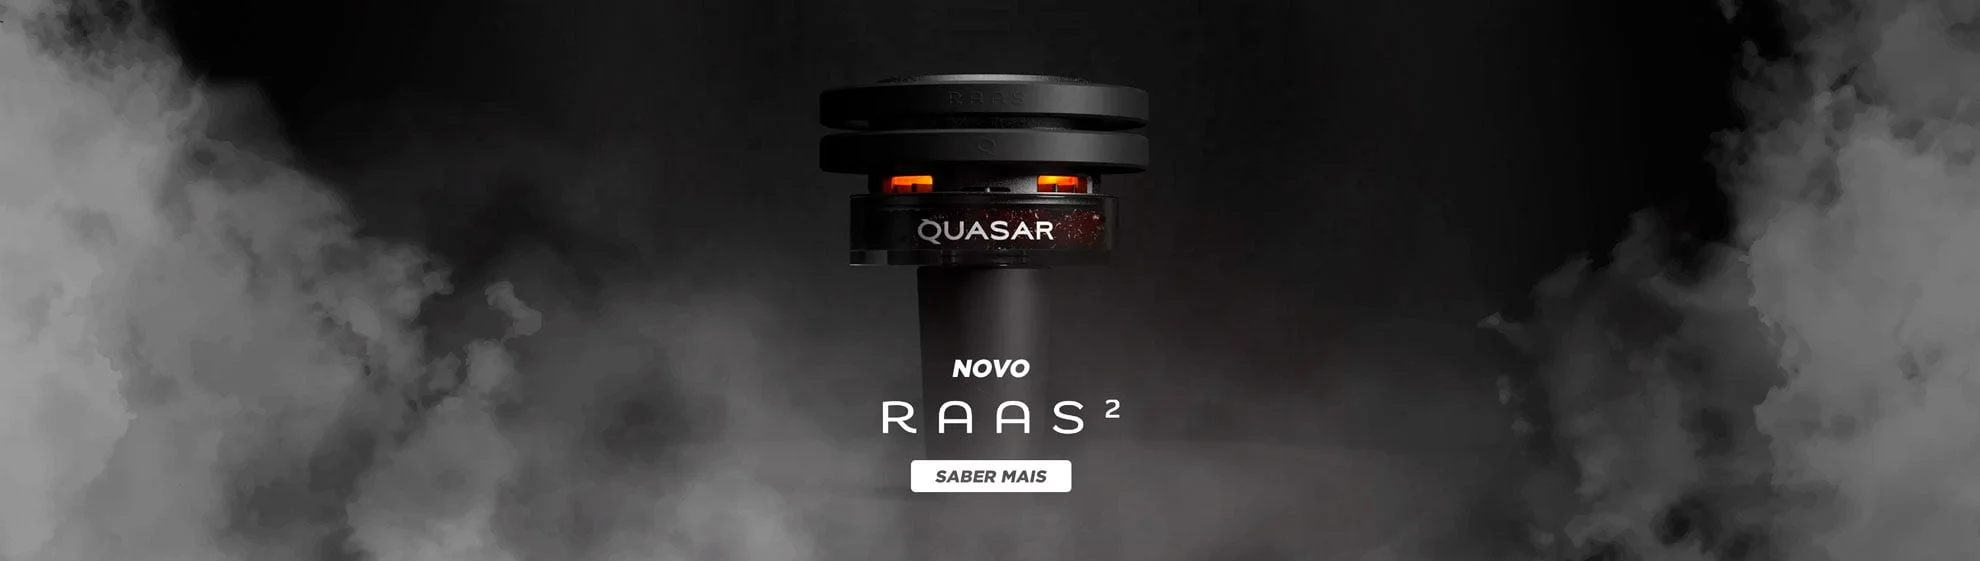 Quasar Raas 2